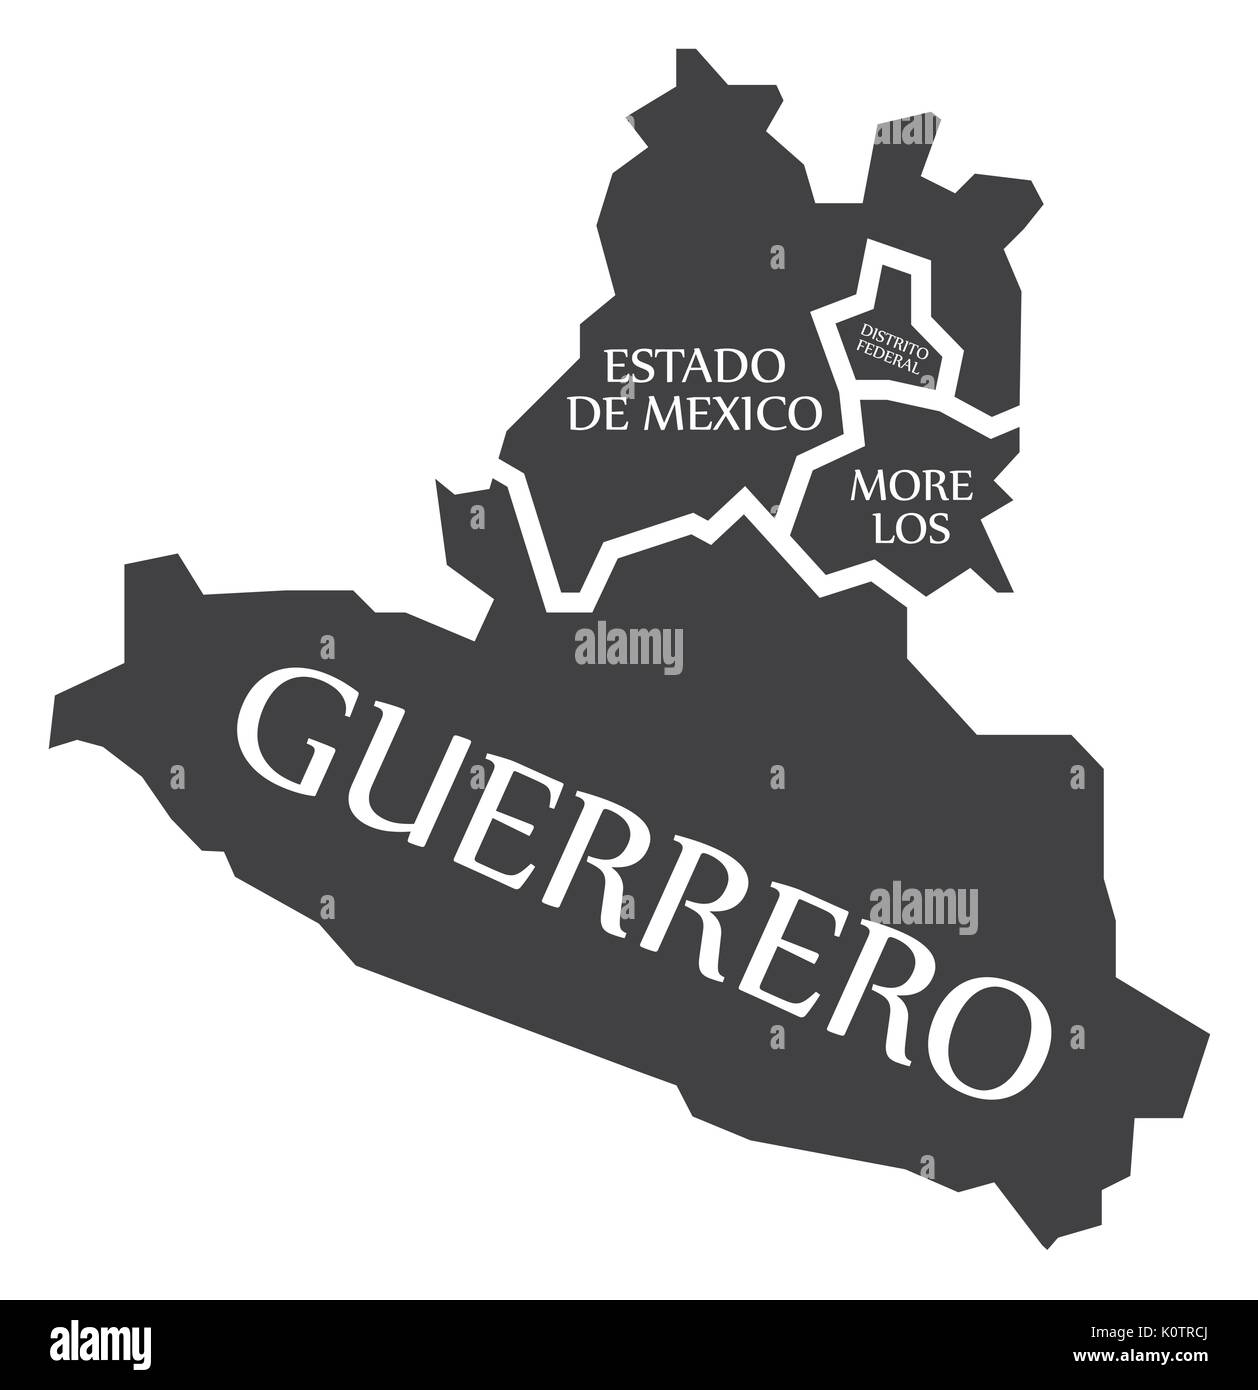 Estado de Mexico - Distrito Federal - Morelos - Guerrero Map Mexico illustration Stock Vector